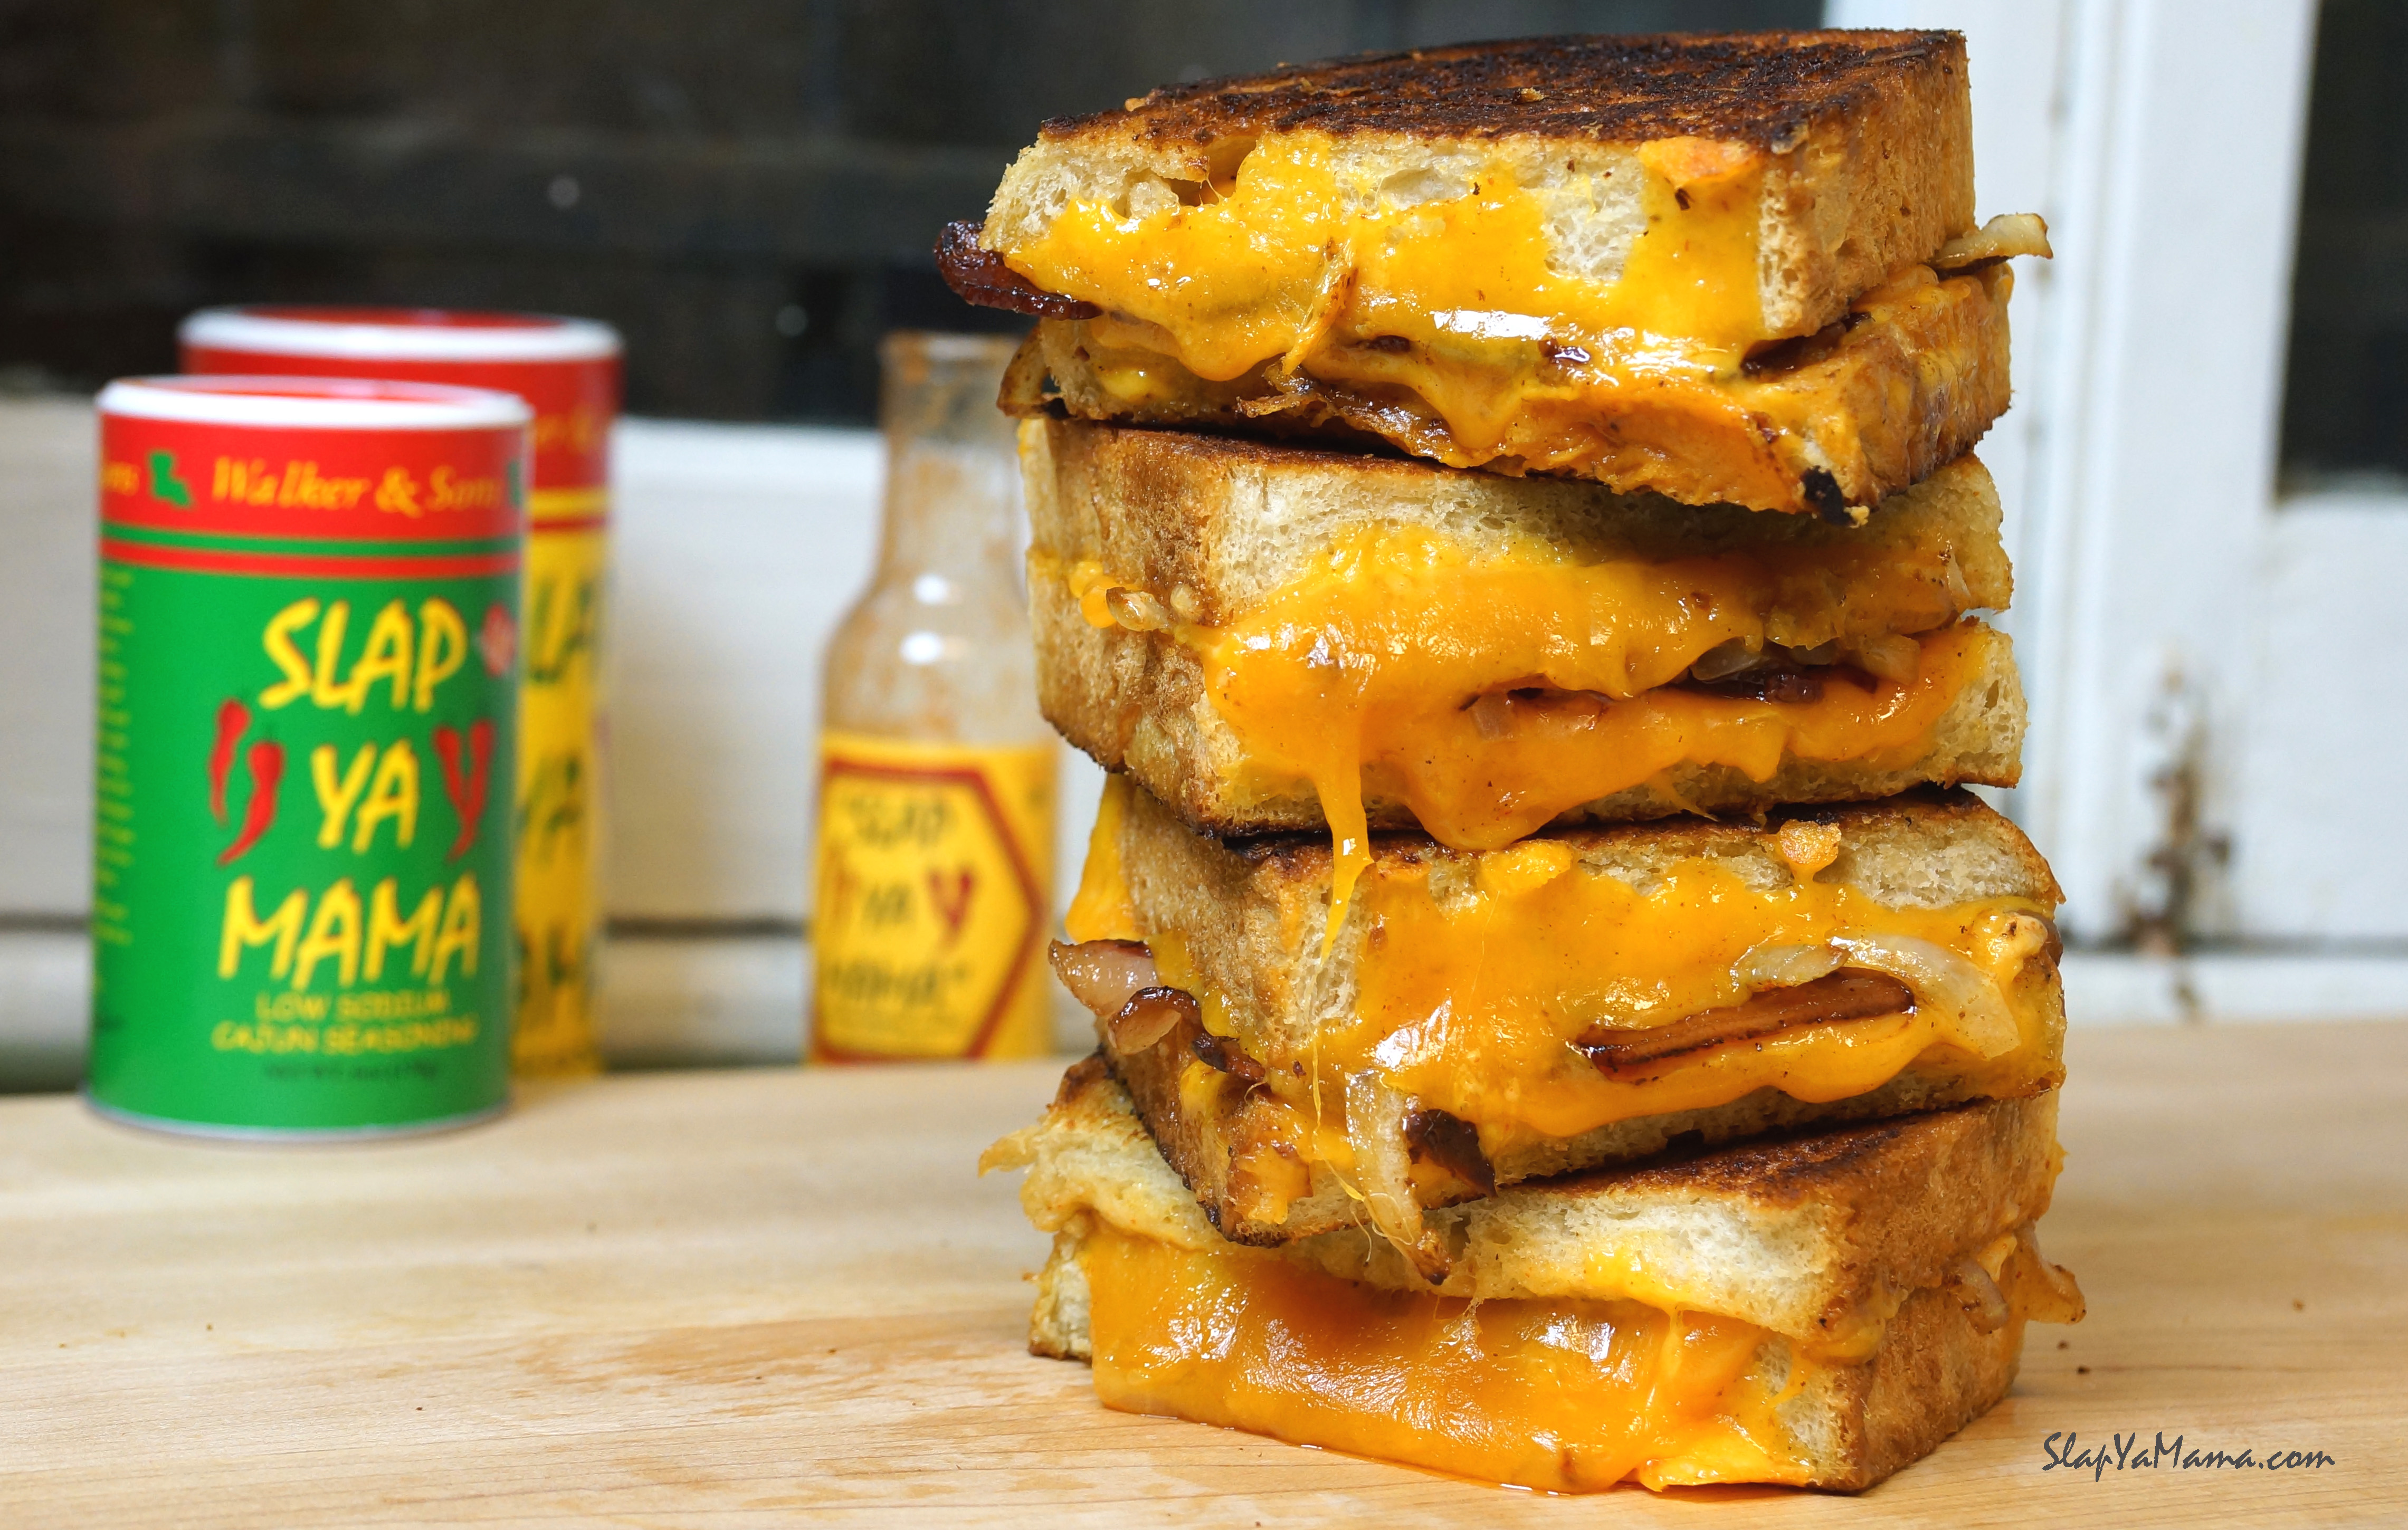 The Ultimate Grilled Cheese Sandwich - Slap Ya Mama